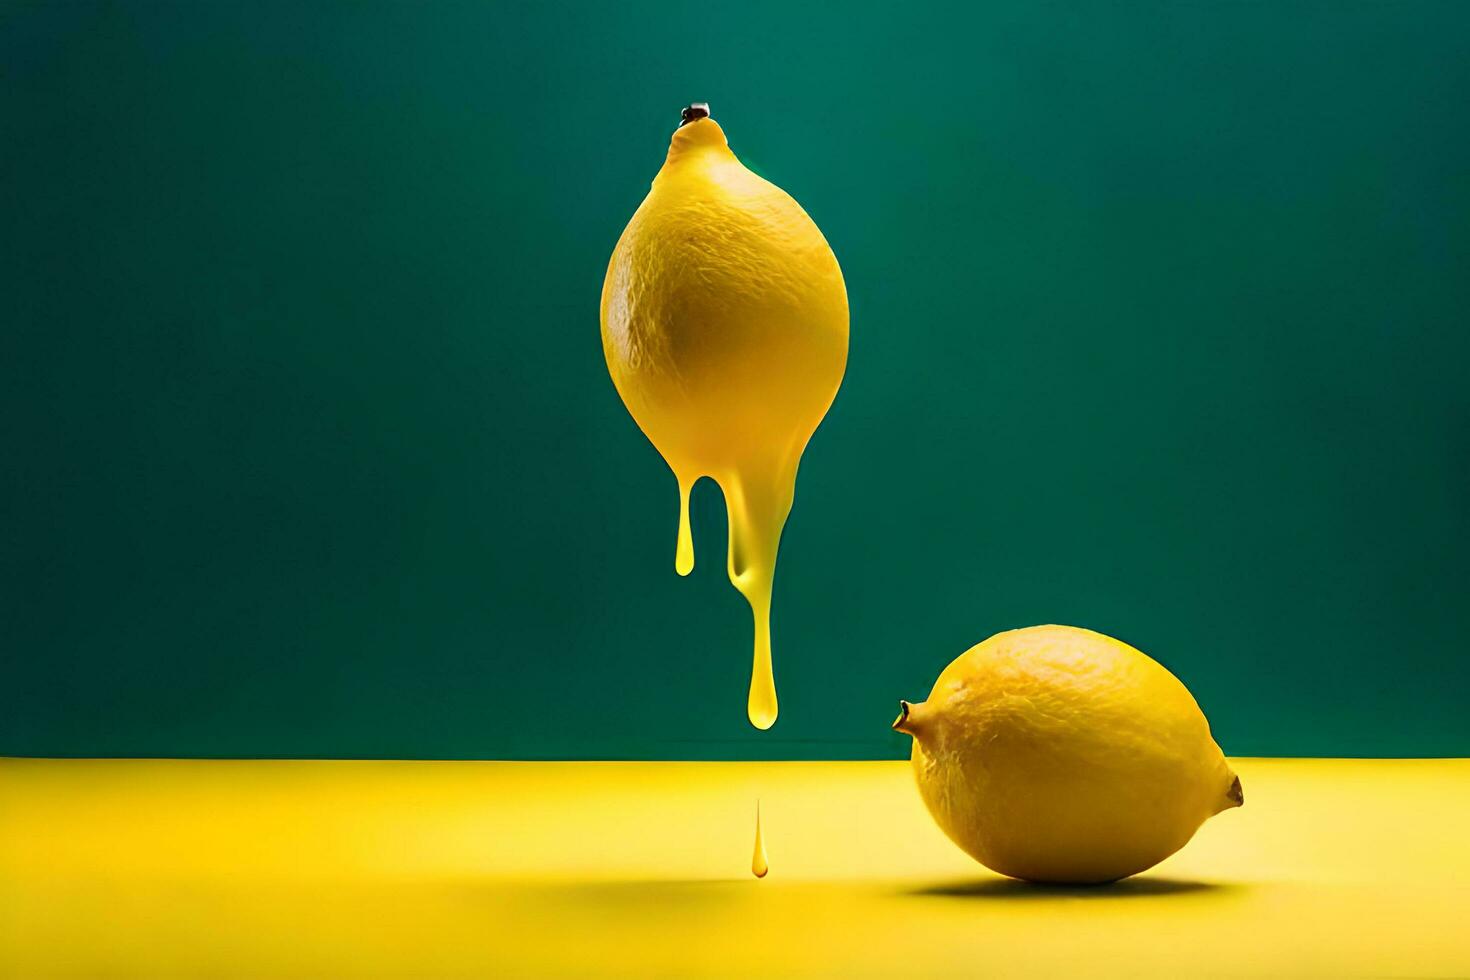 citron- frukt som droppande konst i en färgrik gul bakgrund foto